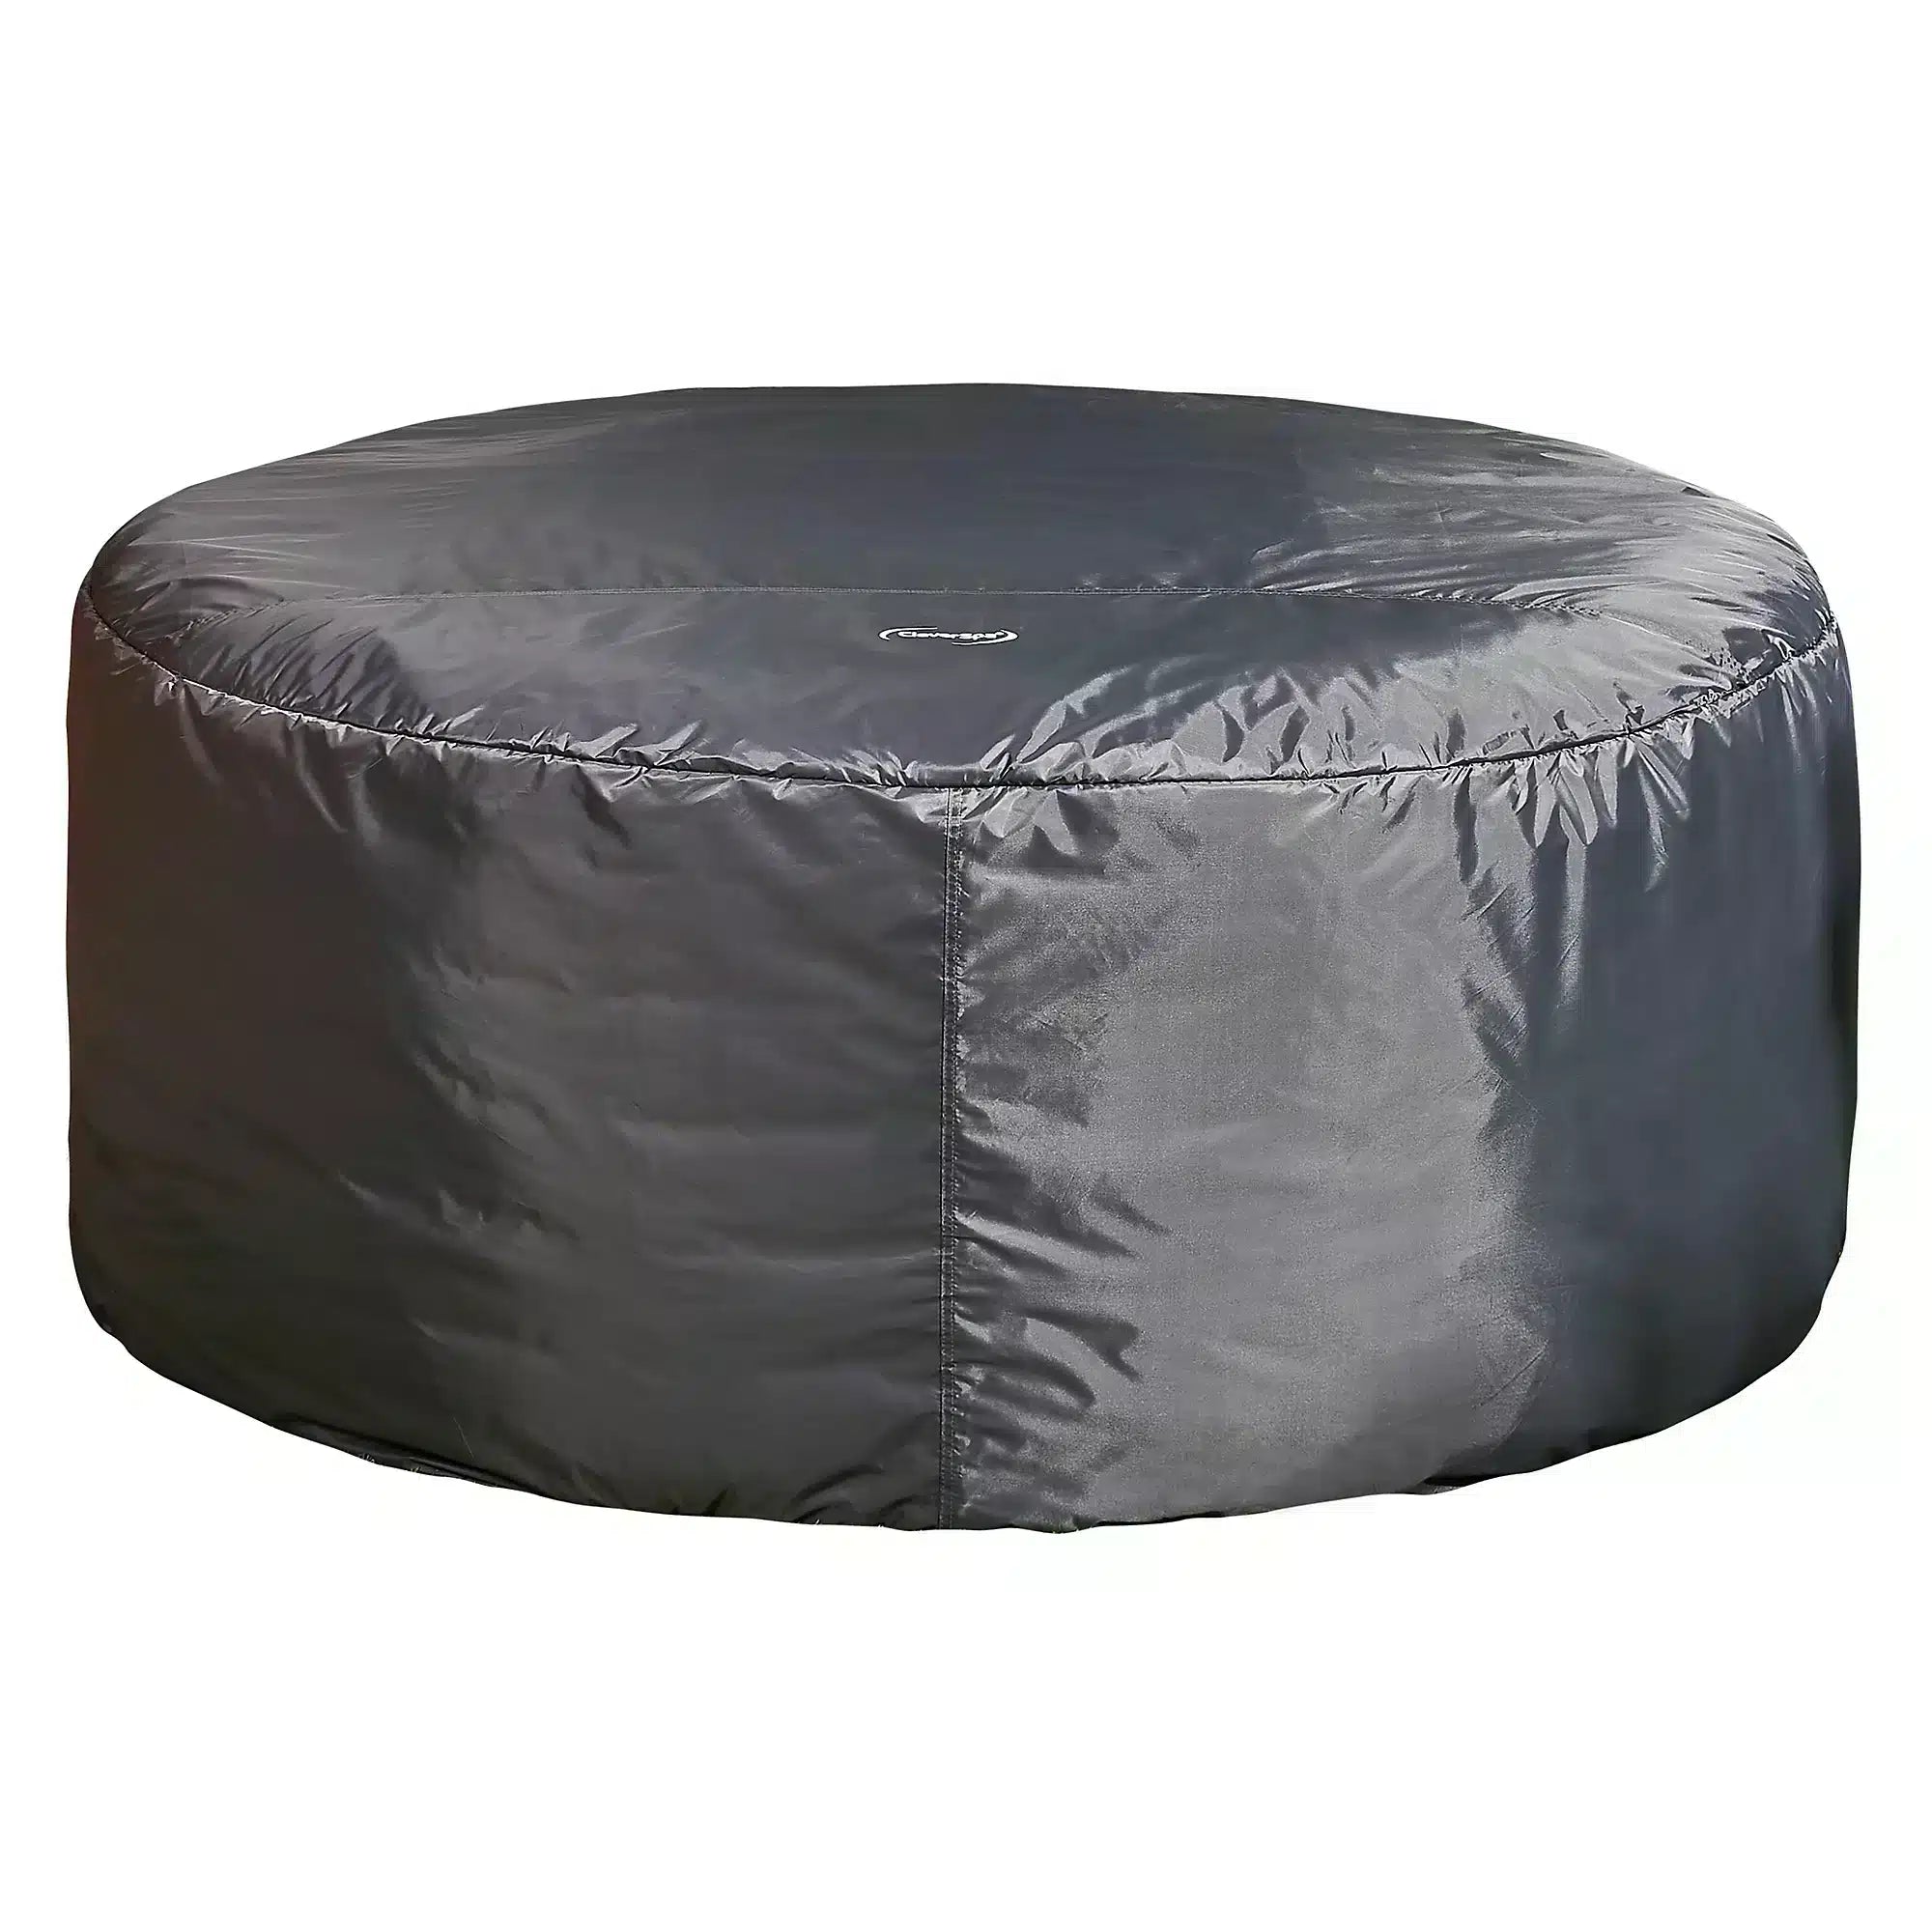 CleverSpa Grey Circular Hot tub Cover (L)1.85m (W)1.85m 2865